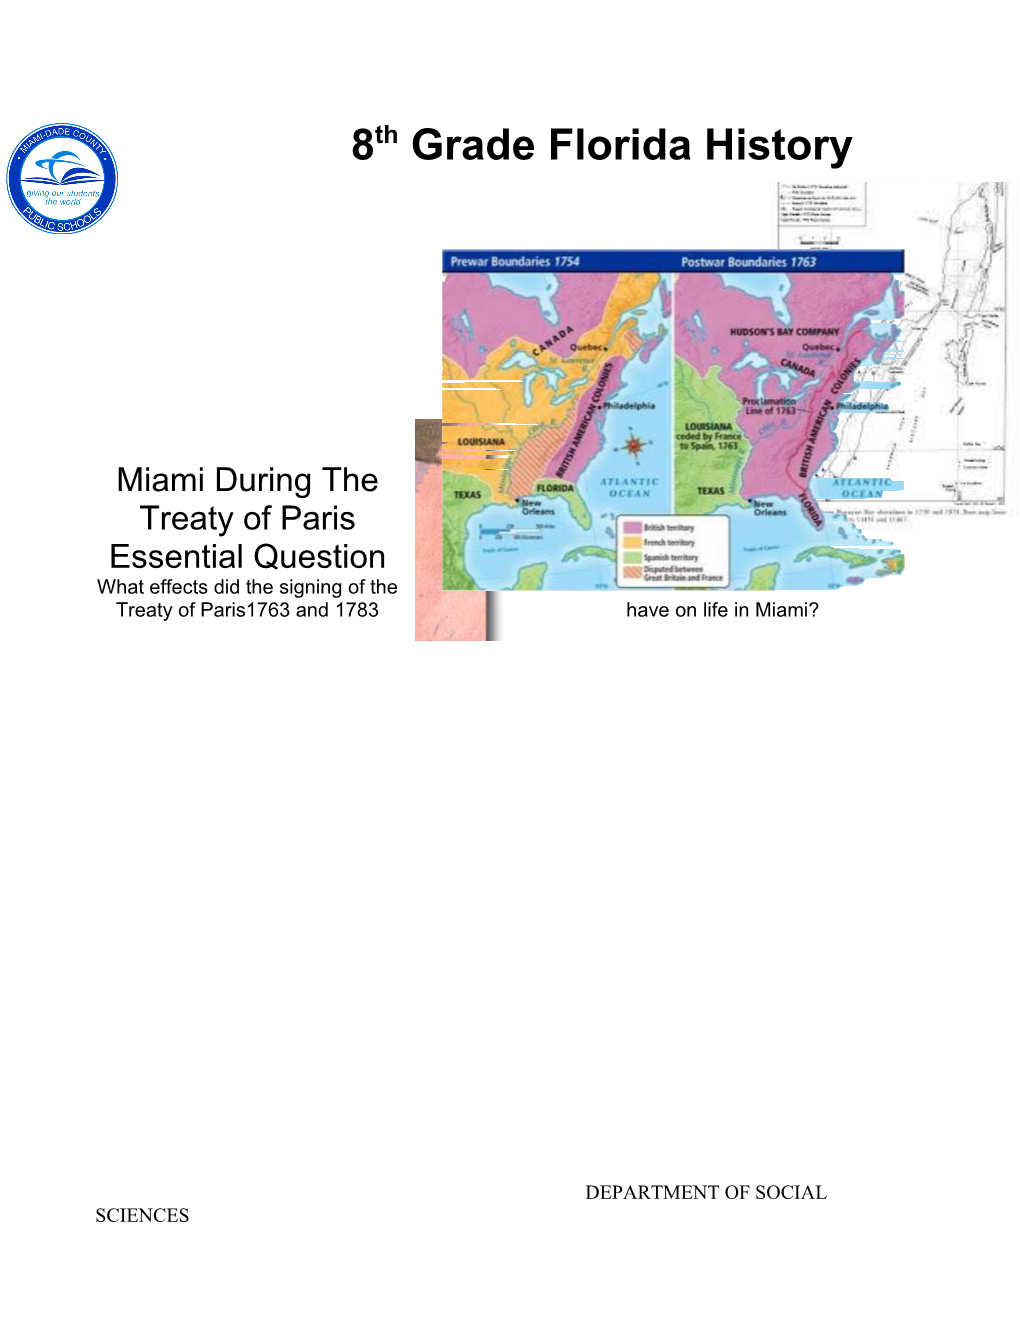 Miami During the Treaty of Paris